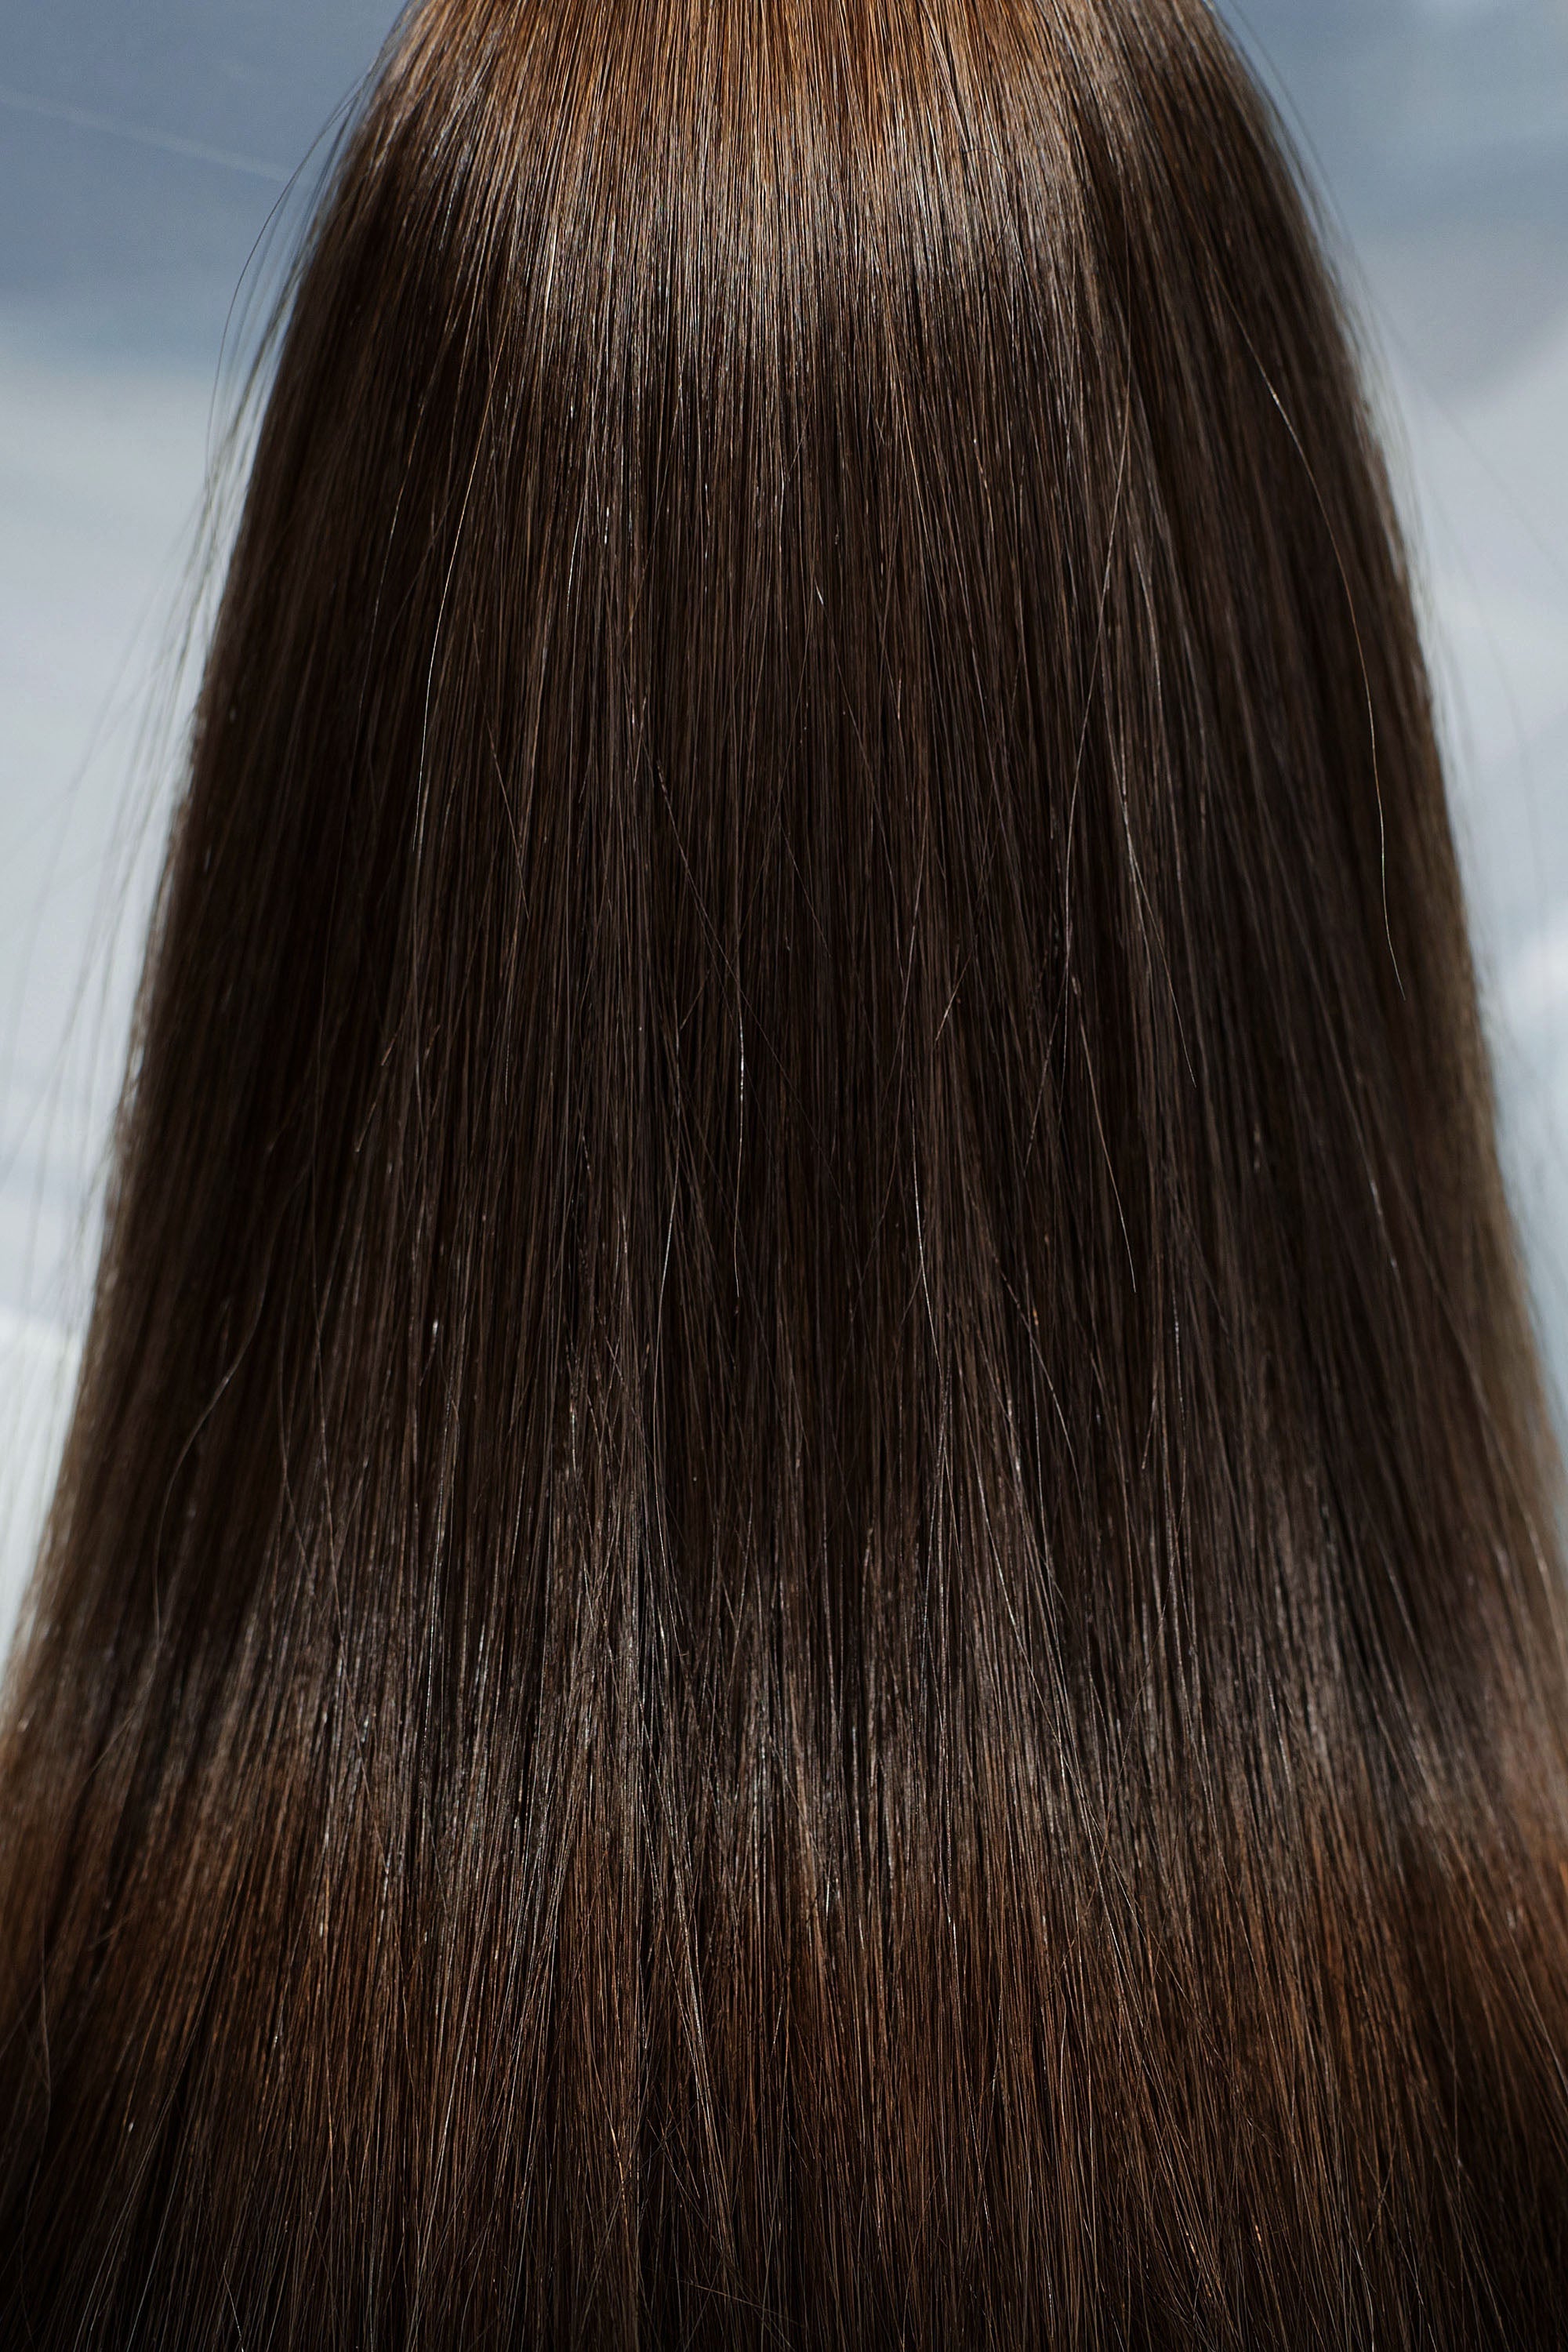 Behair professional Keratin Tip "Premium" 18" (45cm) Natural Straight Light Brown #4 - 25g (Micro - 0.5g each pcs) hair extensions